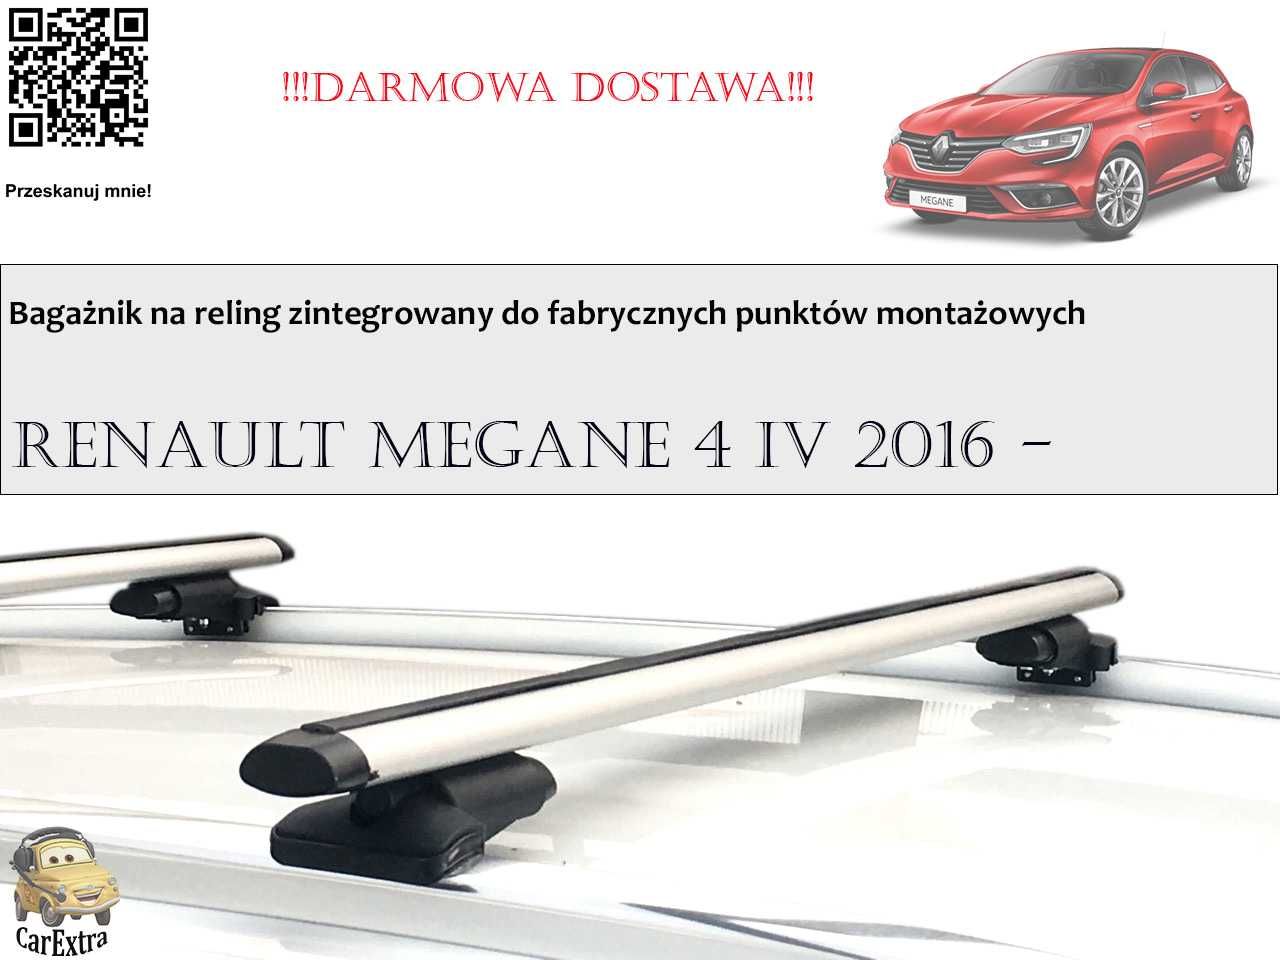 Bagażnik Dachowy Renault Megane 4 IV 2016 -